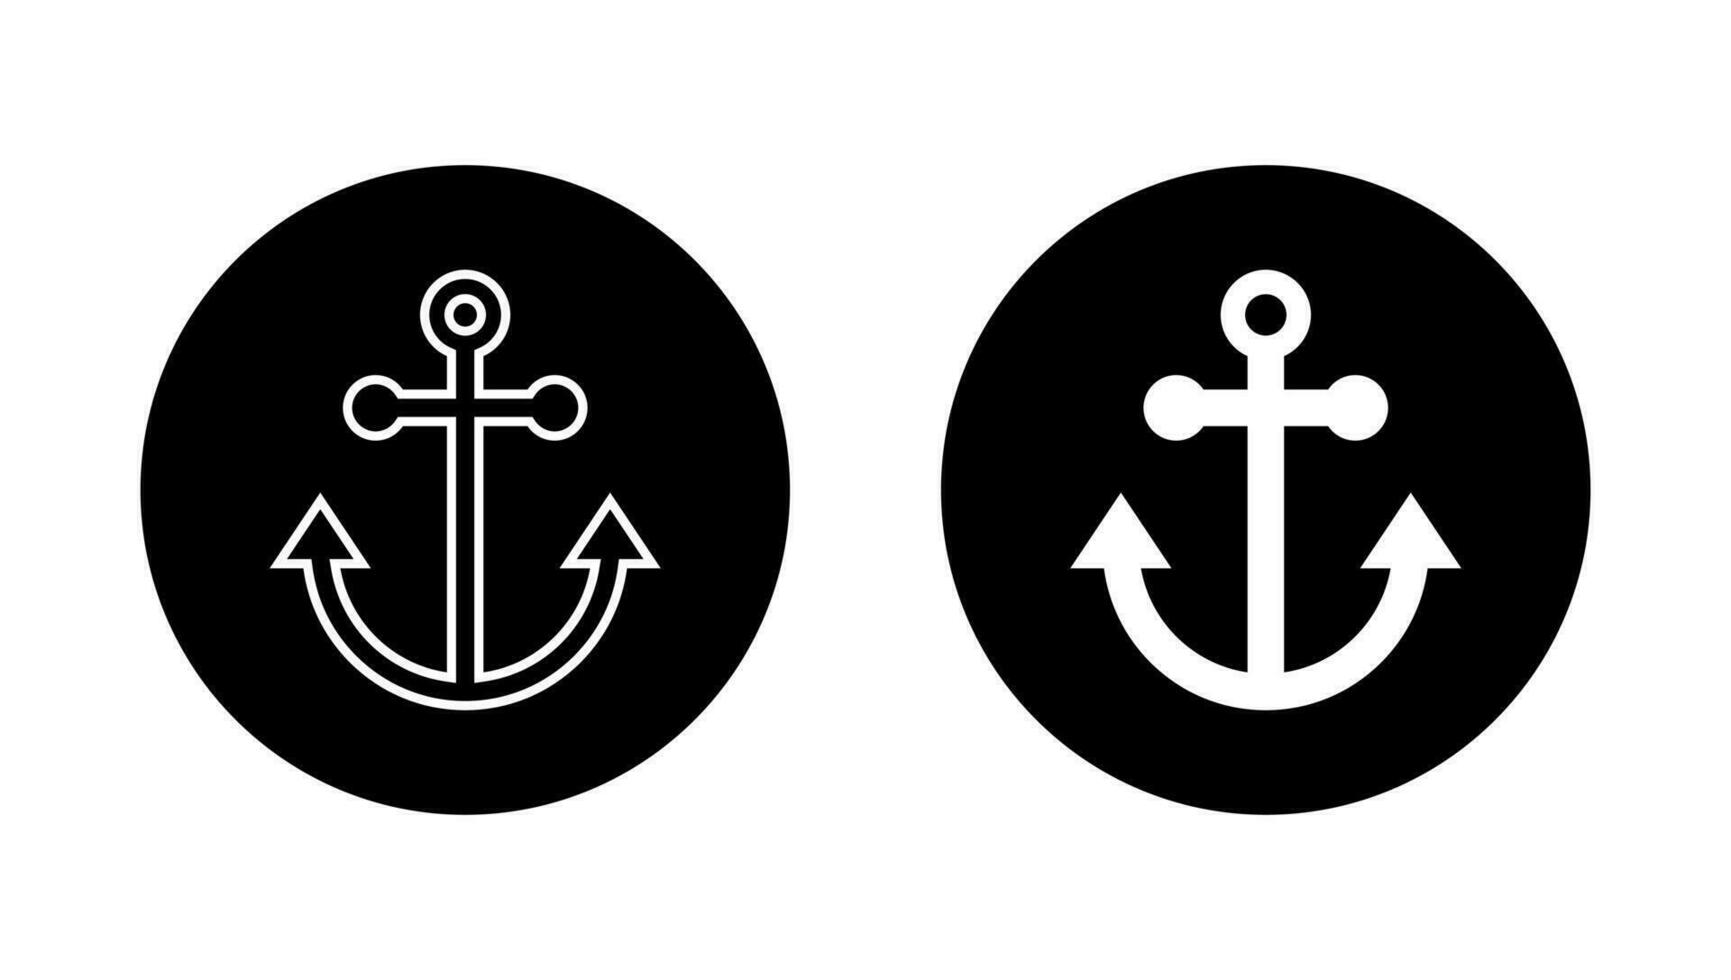 Nautical ship anchor icon vector in circle. Marine sign symbol